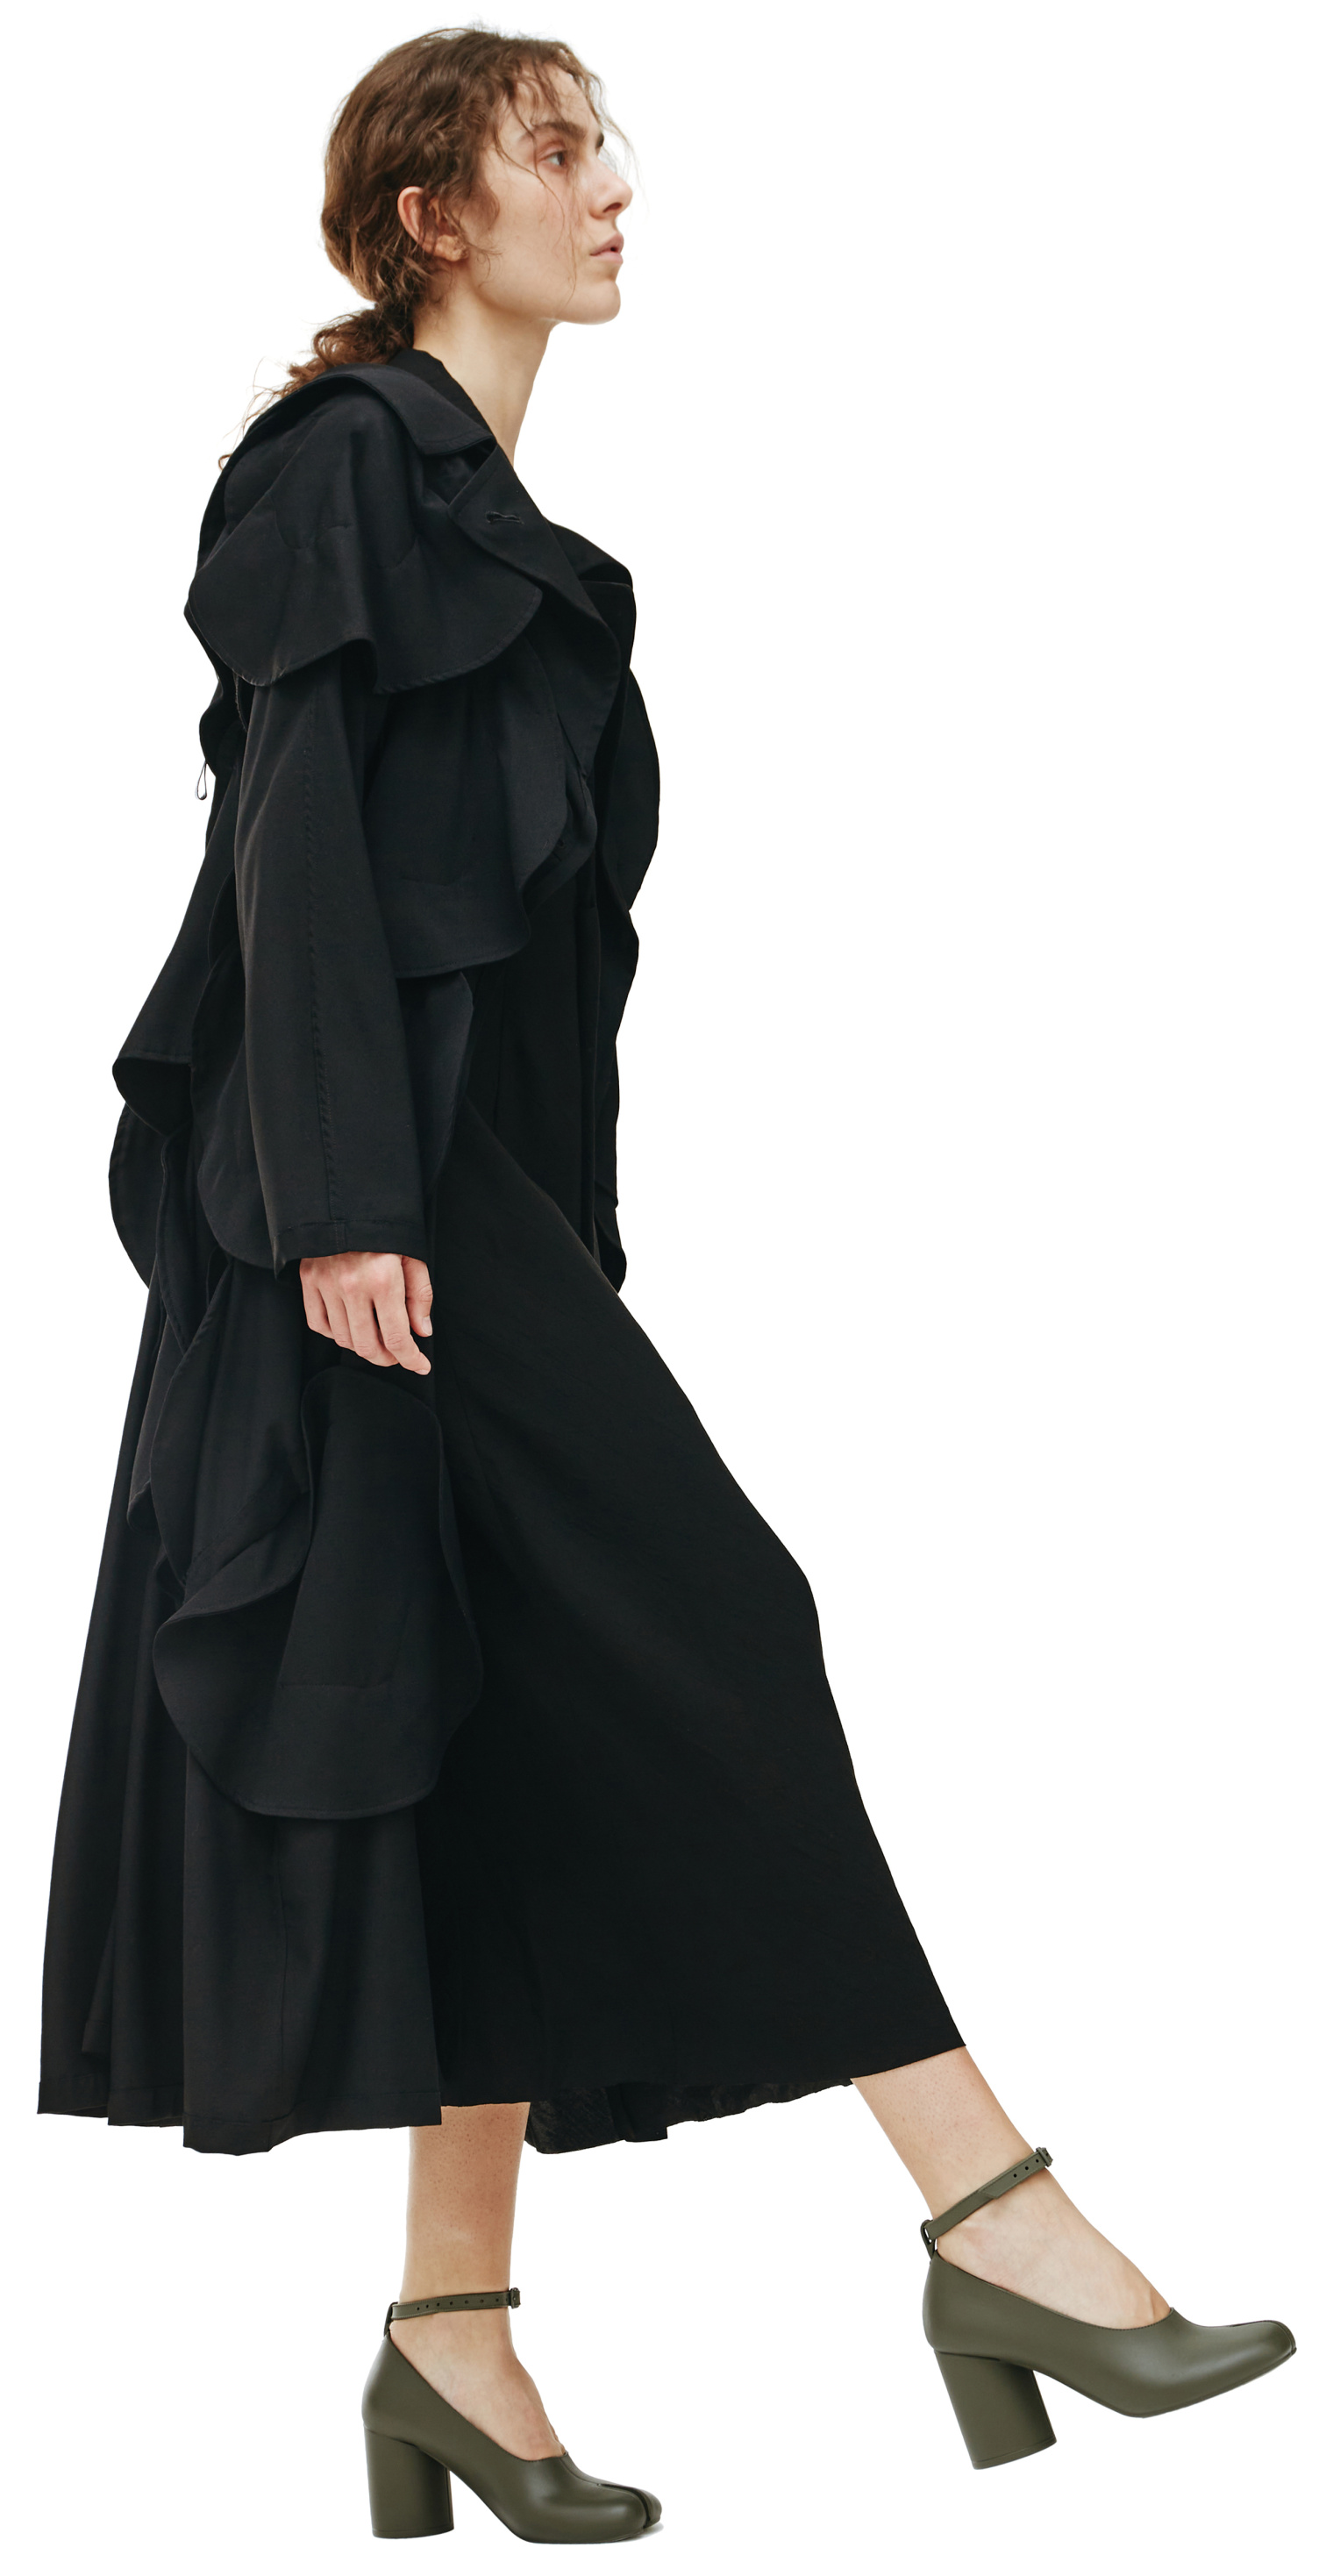 Yohji Yamamoto Black Wool Deconstructed Coat